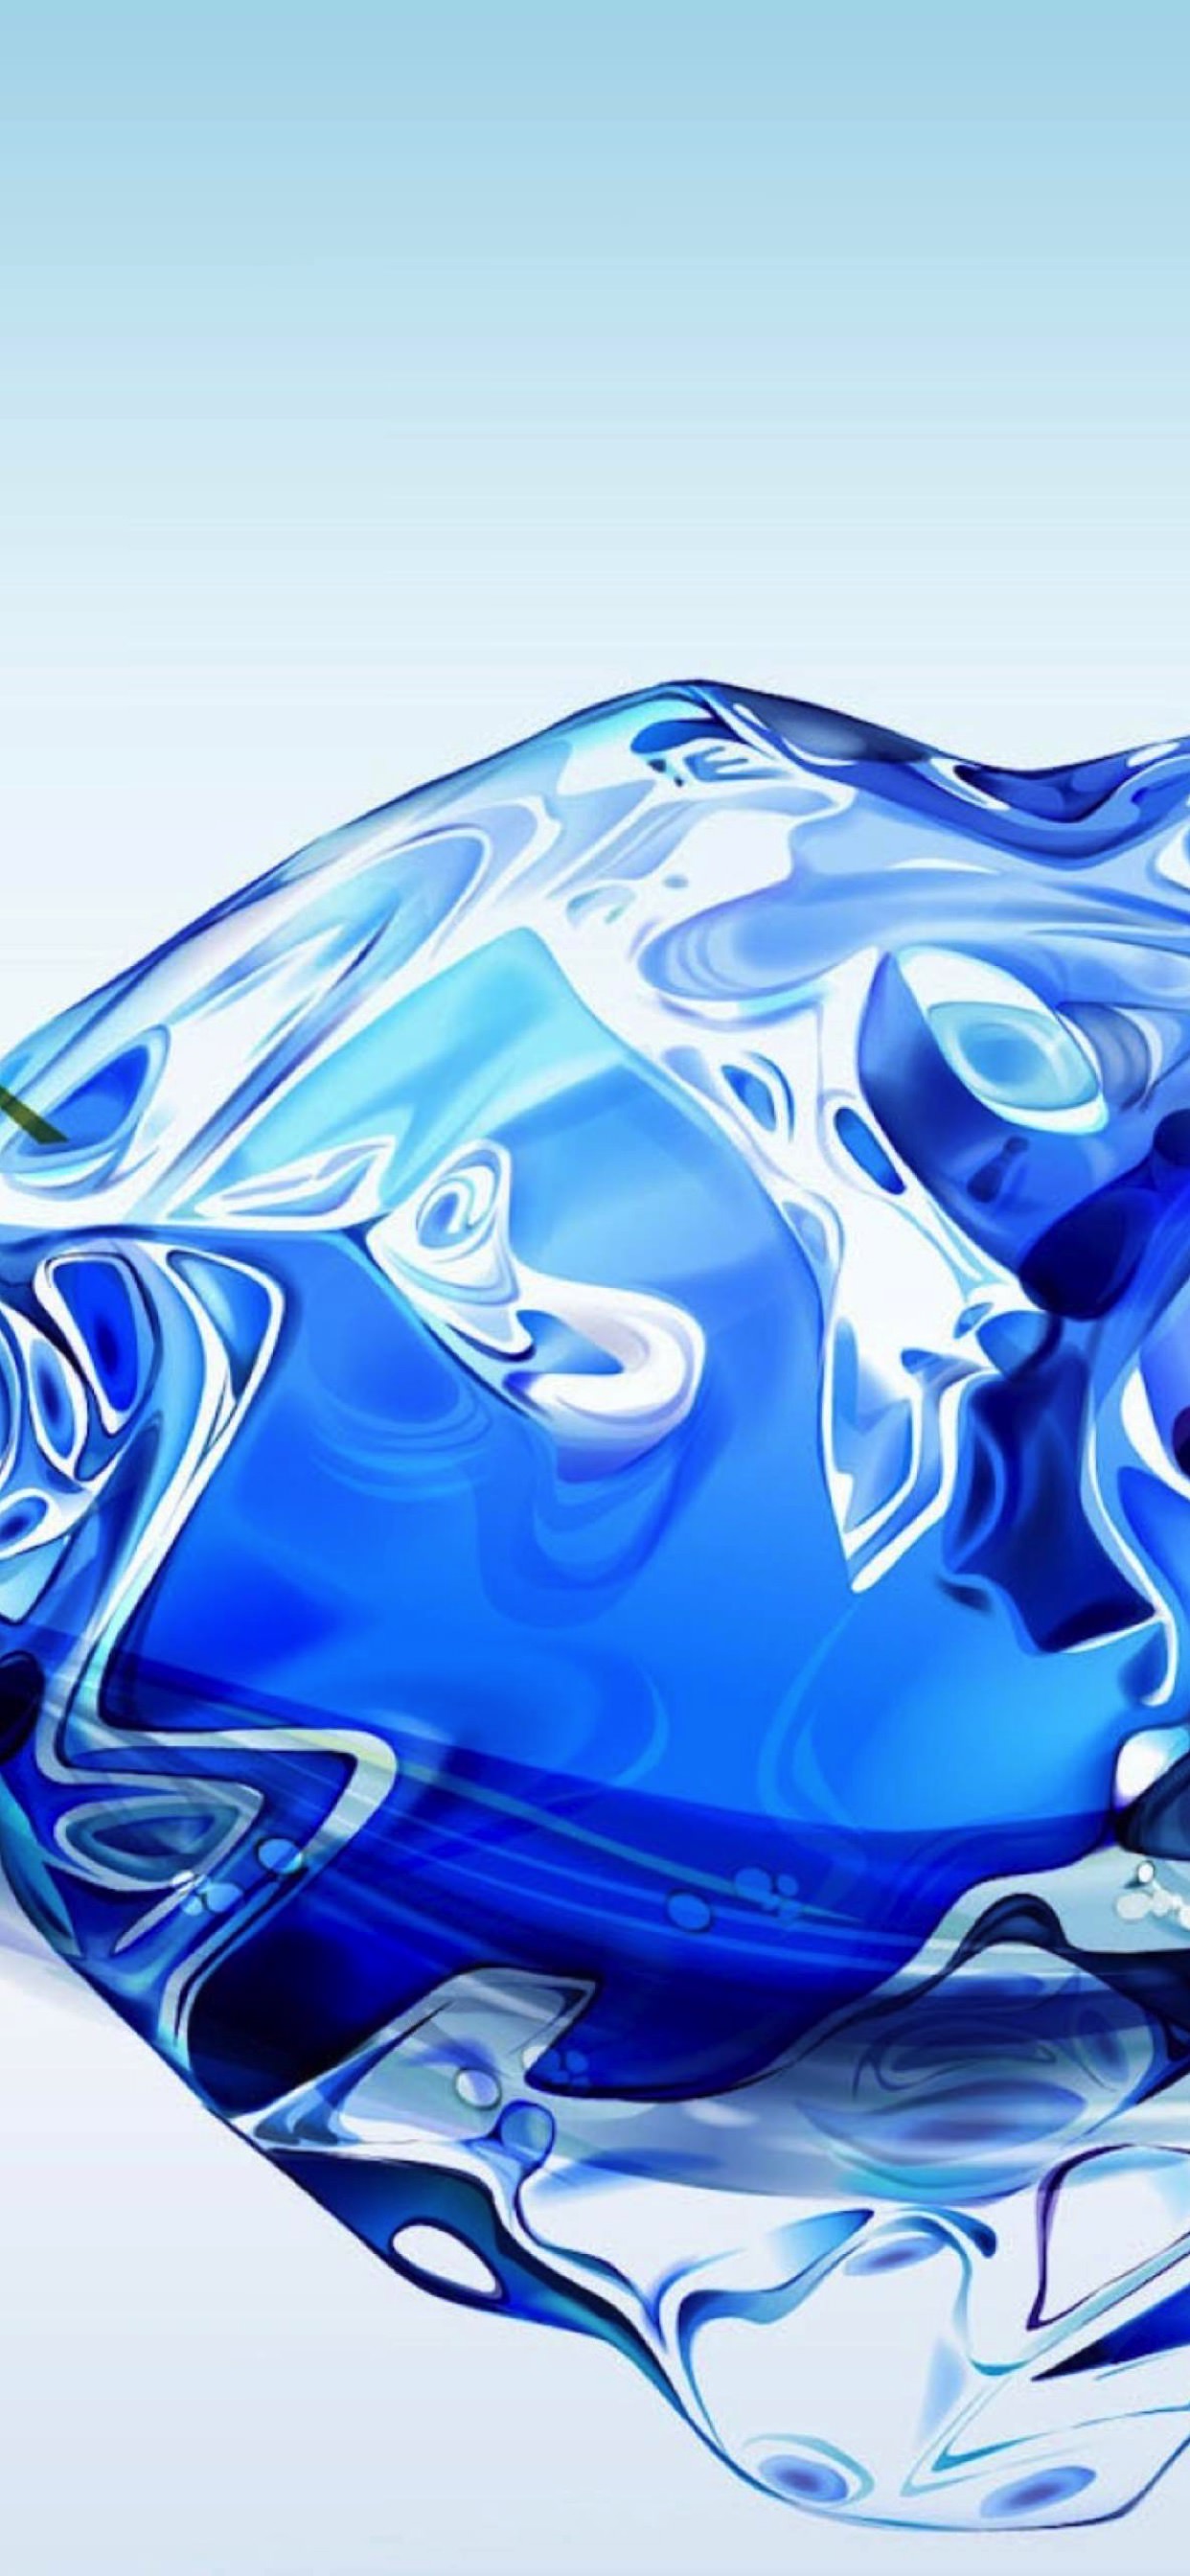 Cool water | wallpaper.sc iPhone XS Max